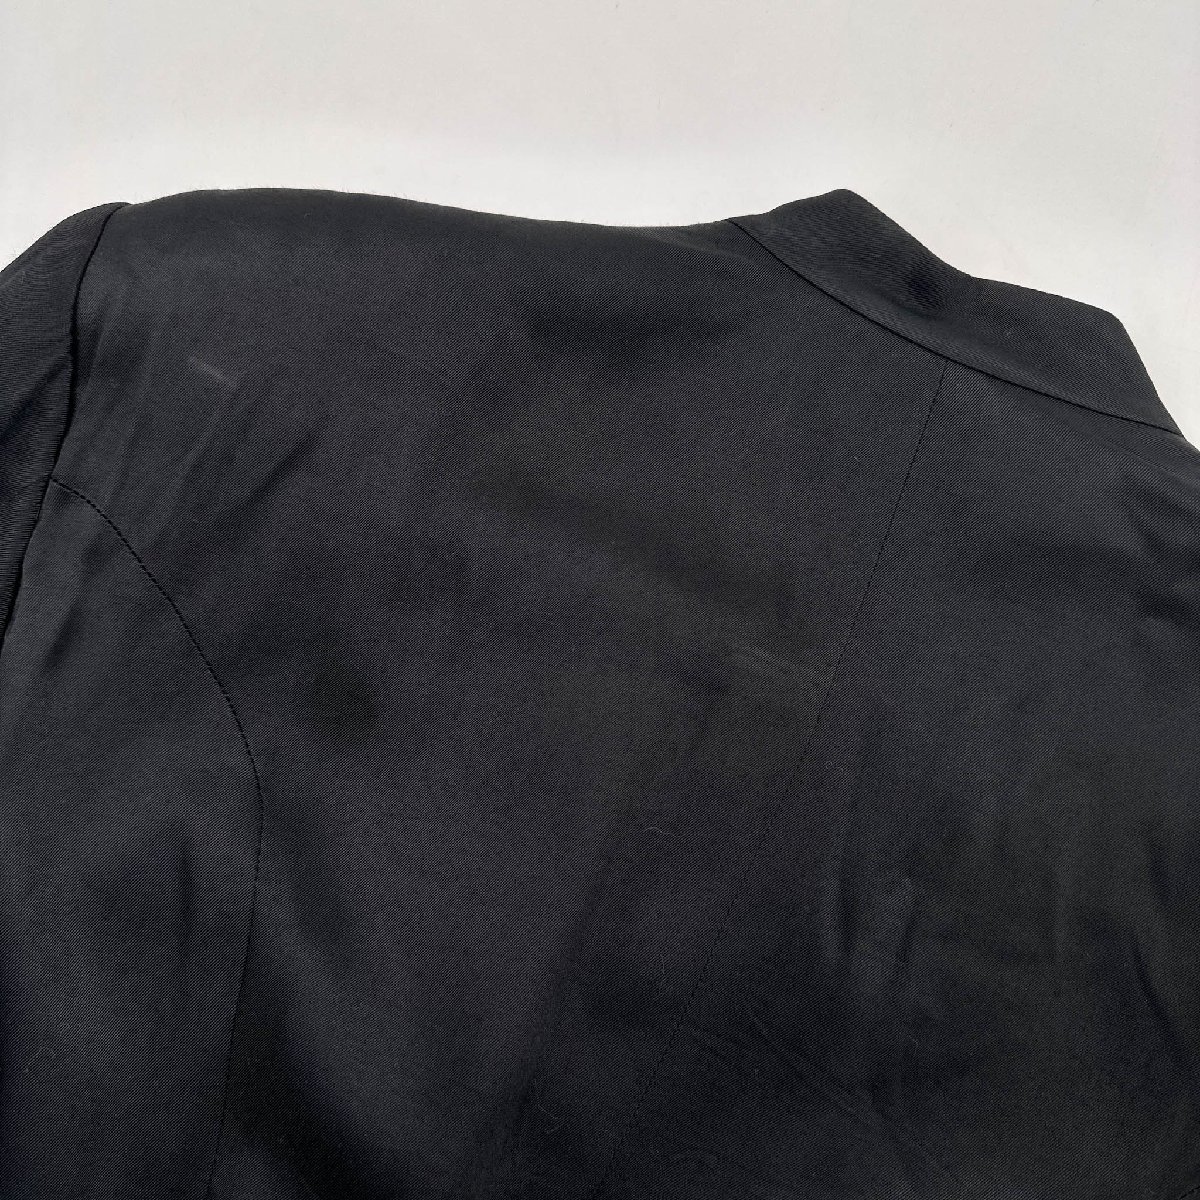 HOMME DE NUIT TOKIO KUMAGAI オムドゥニュイ トキオクマガイ スタンドカラー ジャケット シャツ Mサイズ/ブラック/メンズ 日本製_画像8